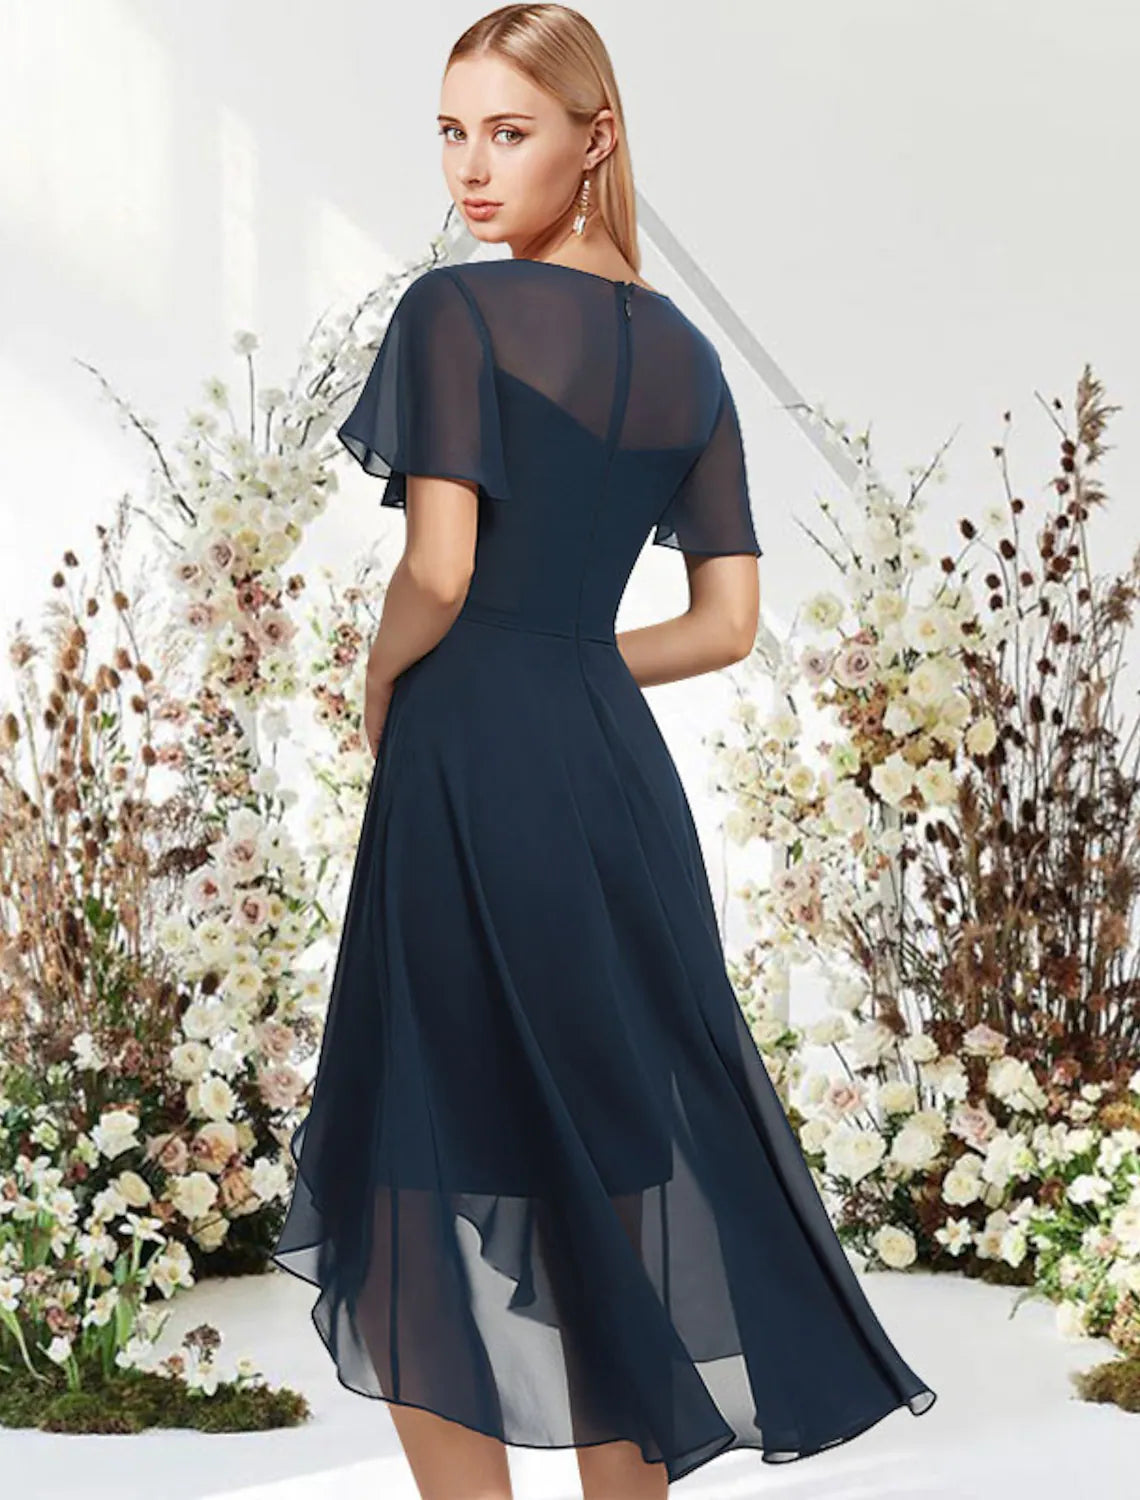 A-Line Cocktail Dresses Wedding Asymmetrical Short Sleeve Chiffon Sleek